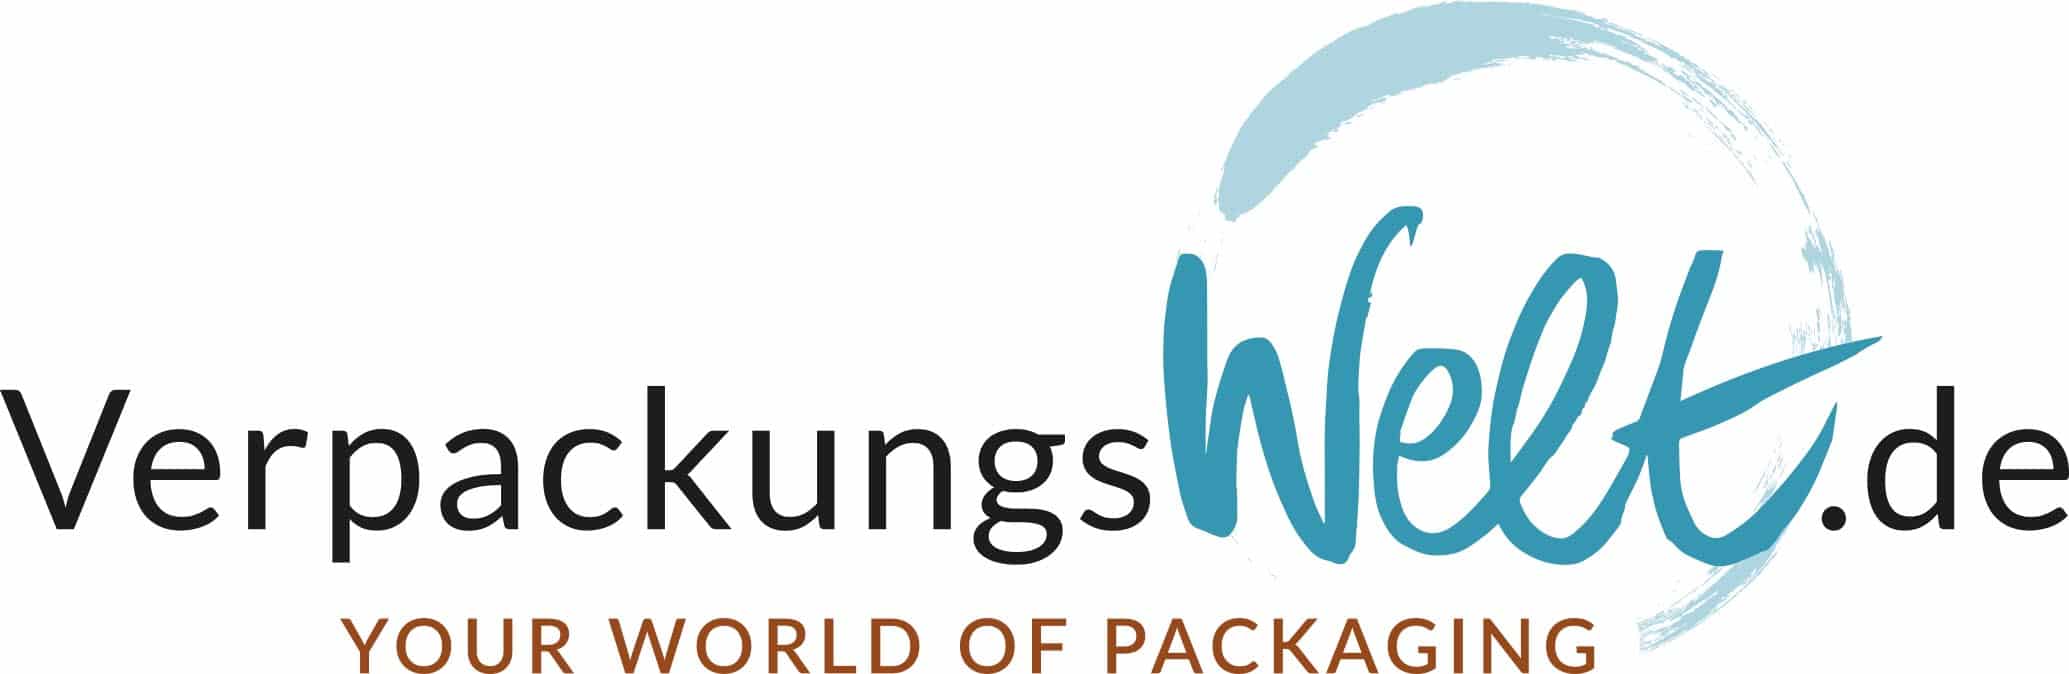 Verpackungswelt_Logo-2020_CMYK